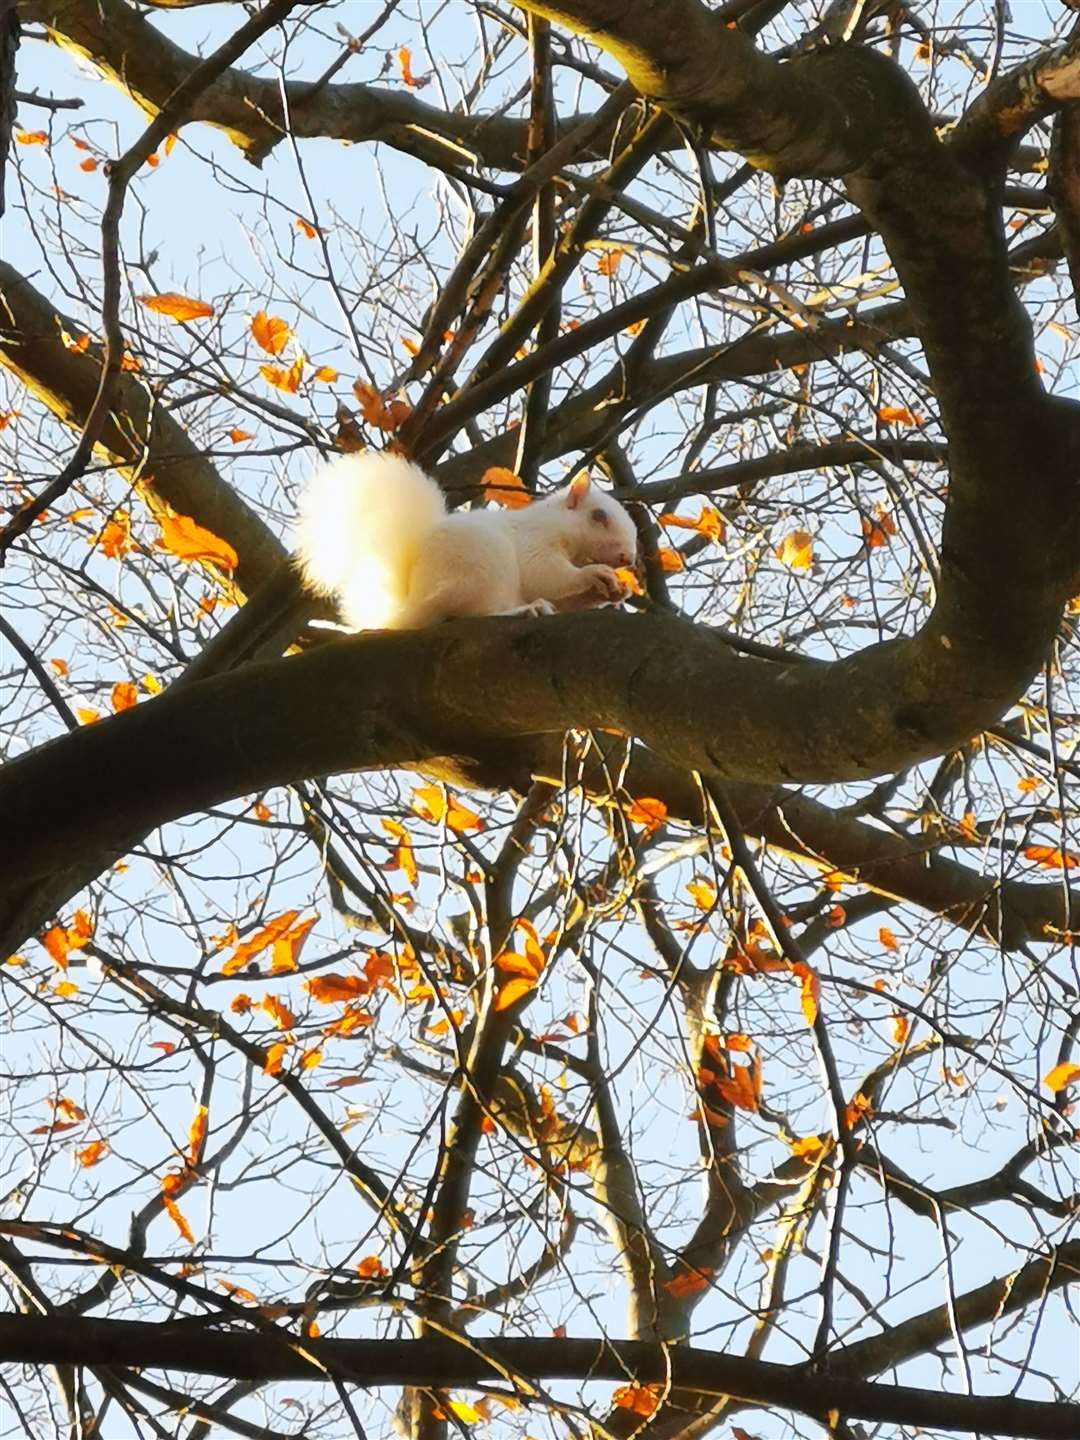 An albino squirrel near Chatham Cemetery in Maidstone Road